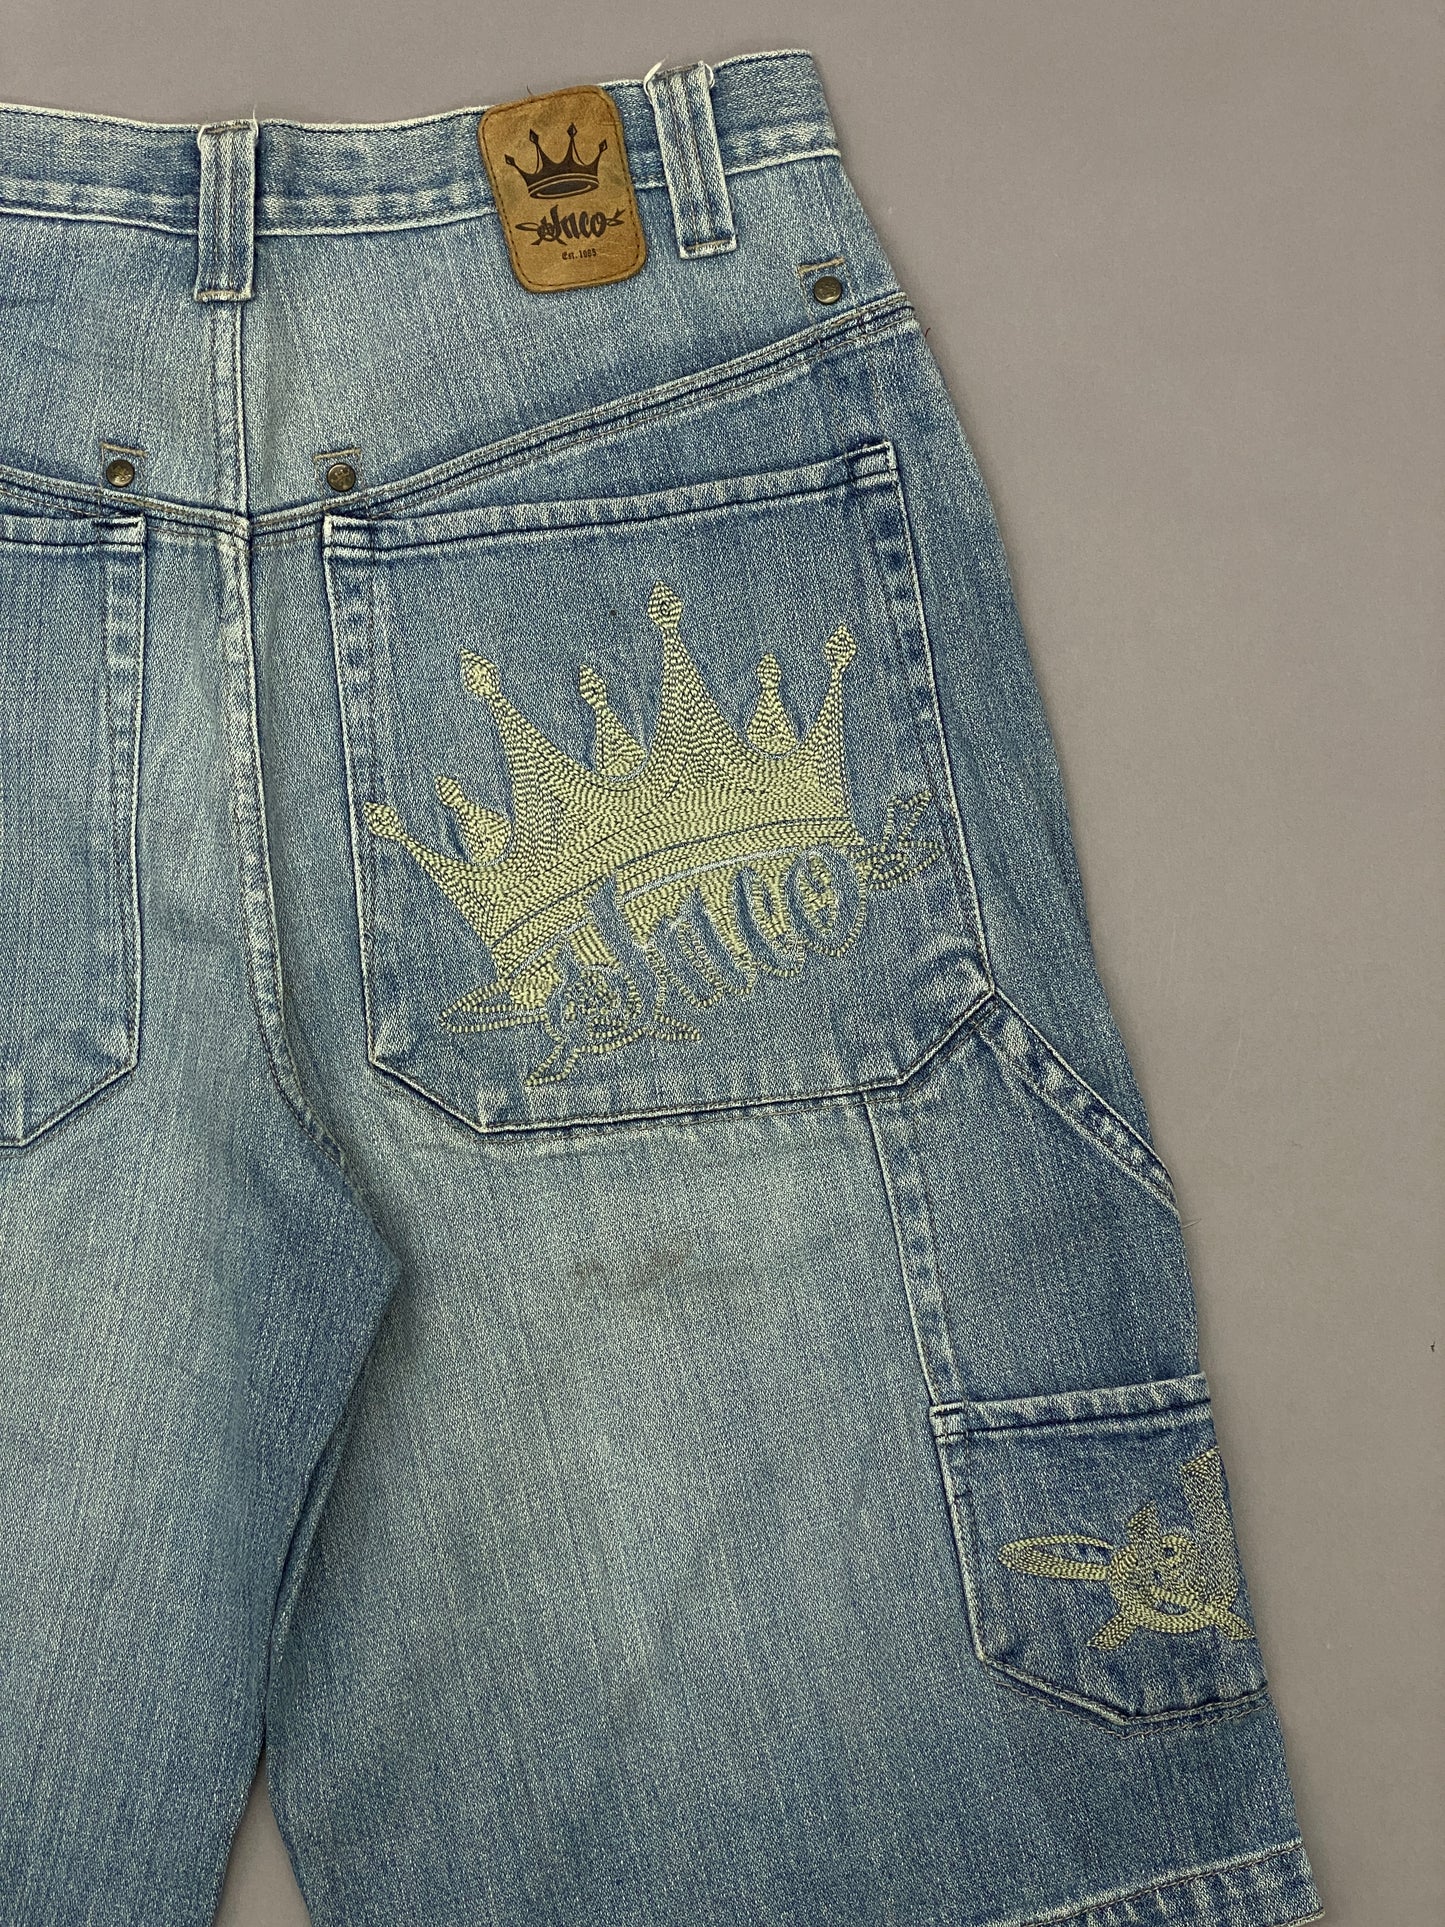 JNCO Crown Vintage Shorts - 32 x 32